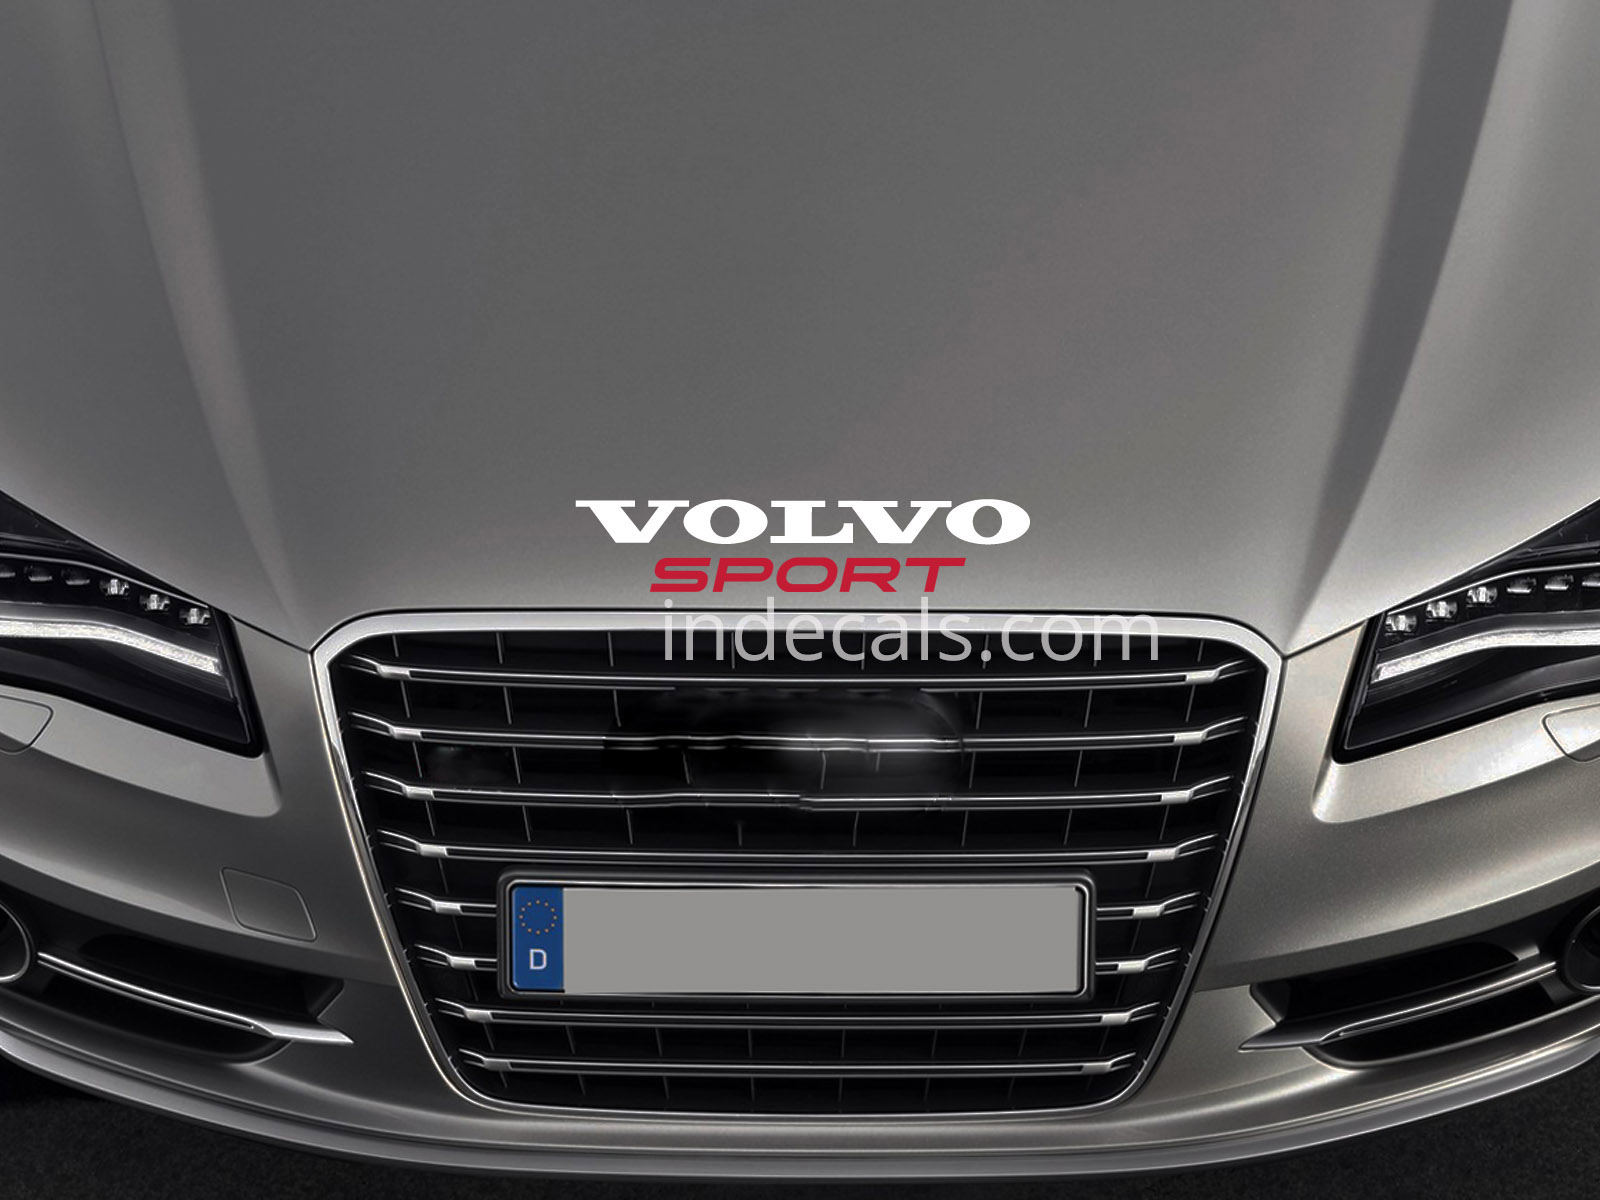 1 x Volvo Sport Sticker for Bonnet - White & Red